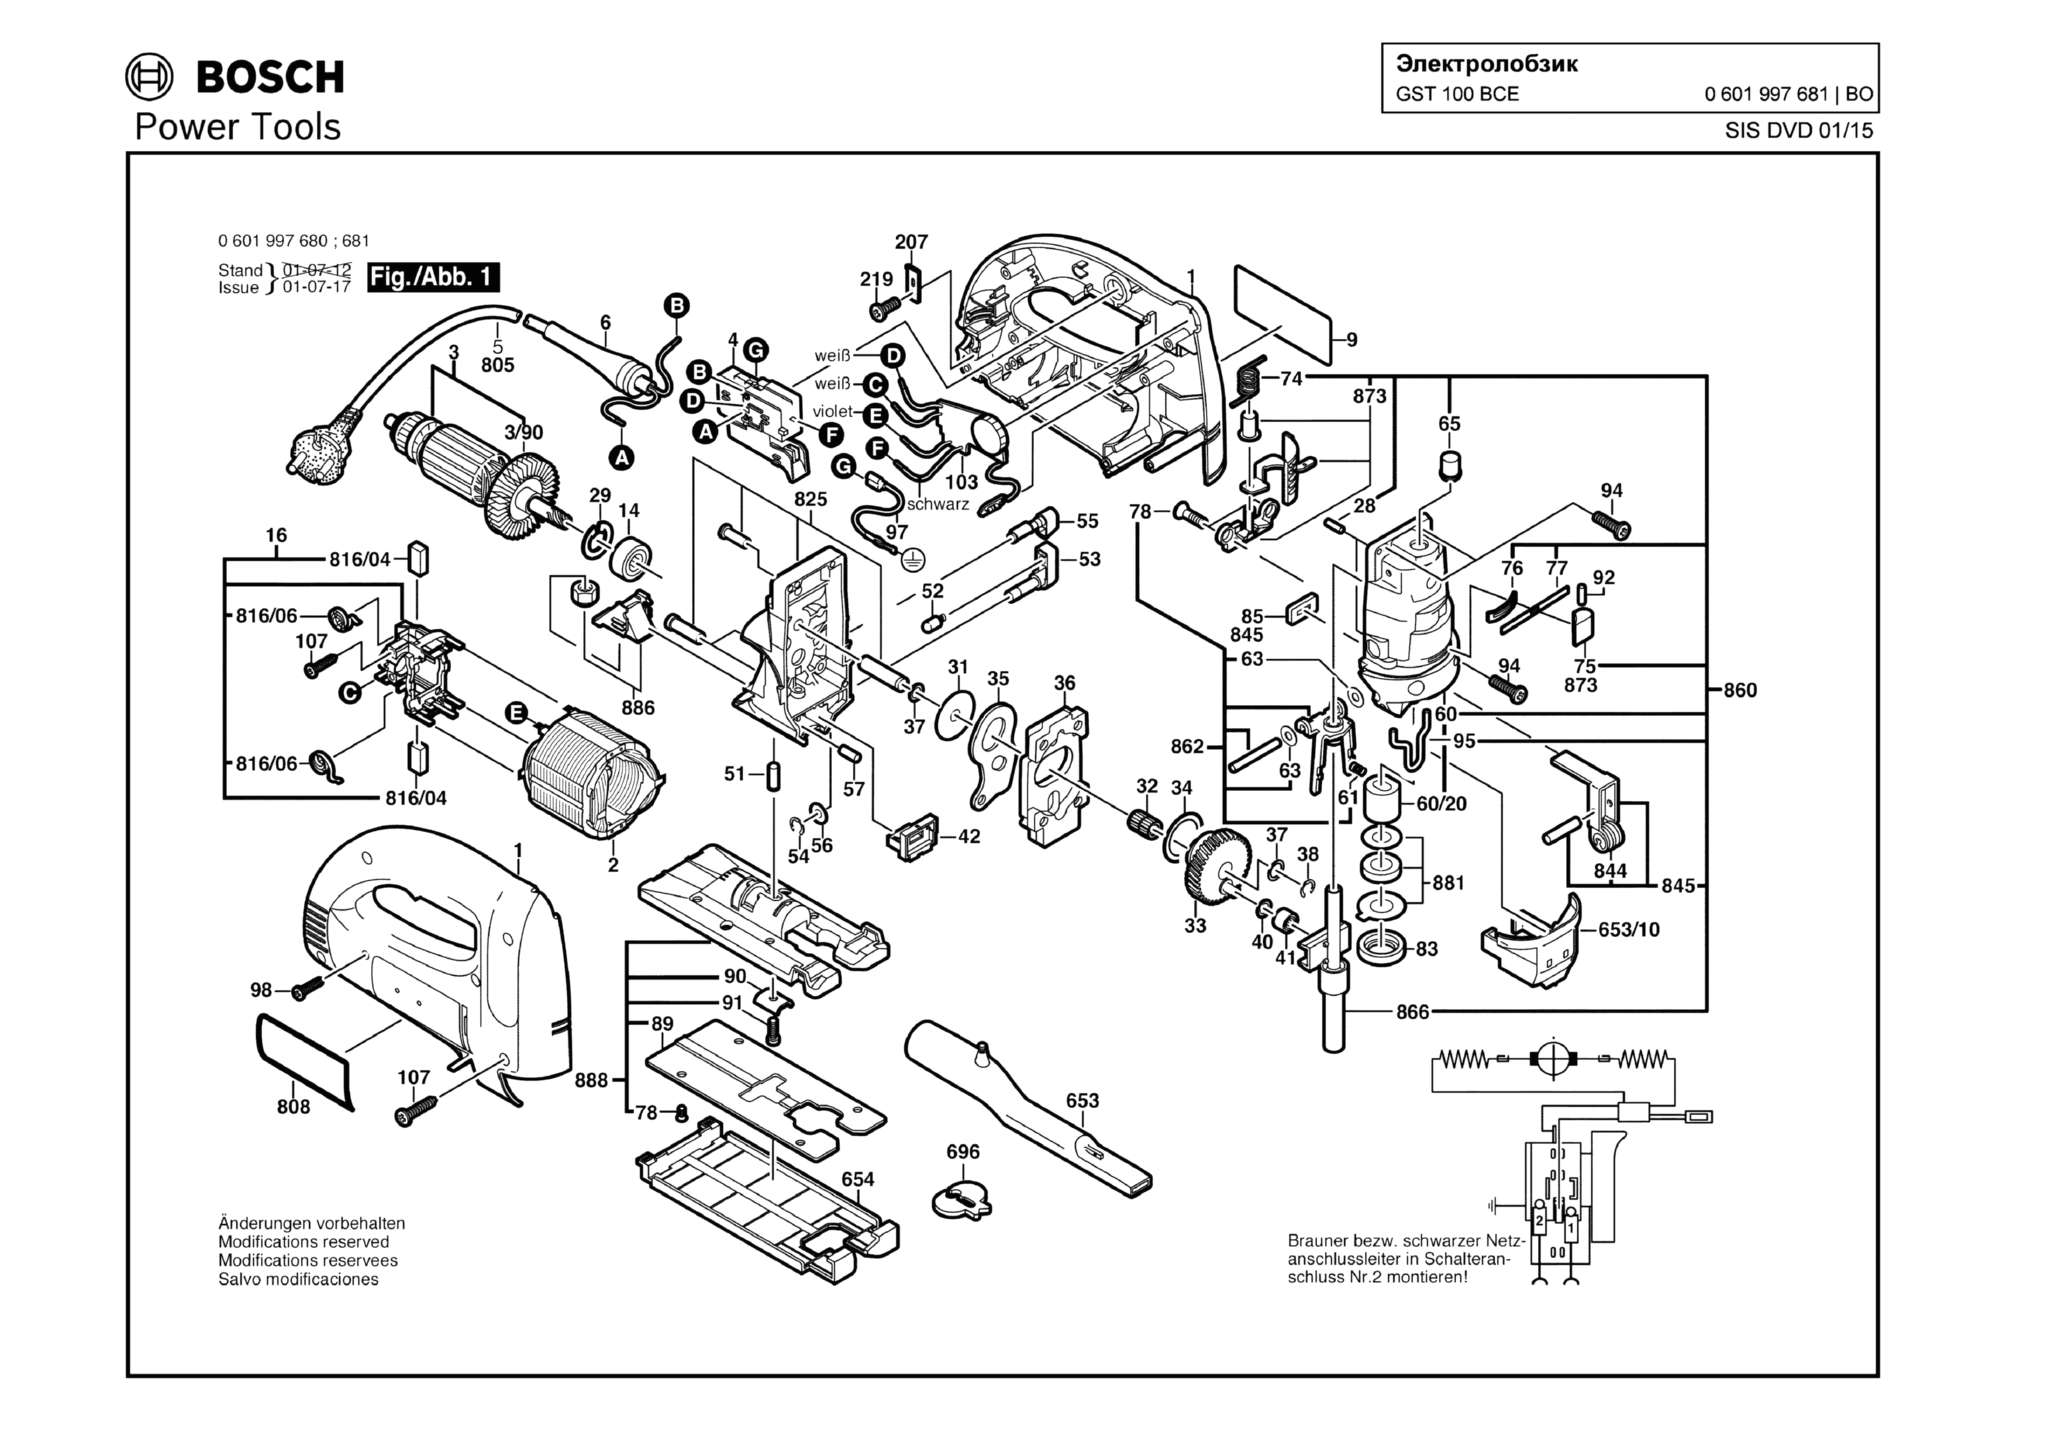 Запчасти, схема и деталировка Bosch GST 100 BCE (ТИП 0601997681)